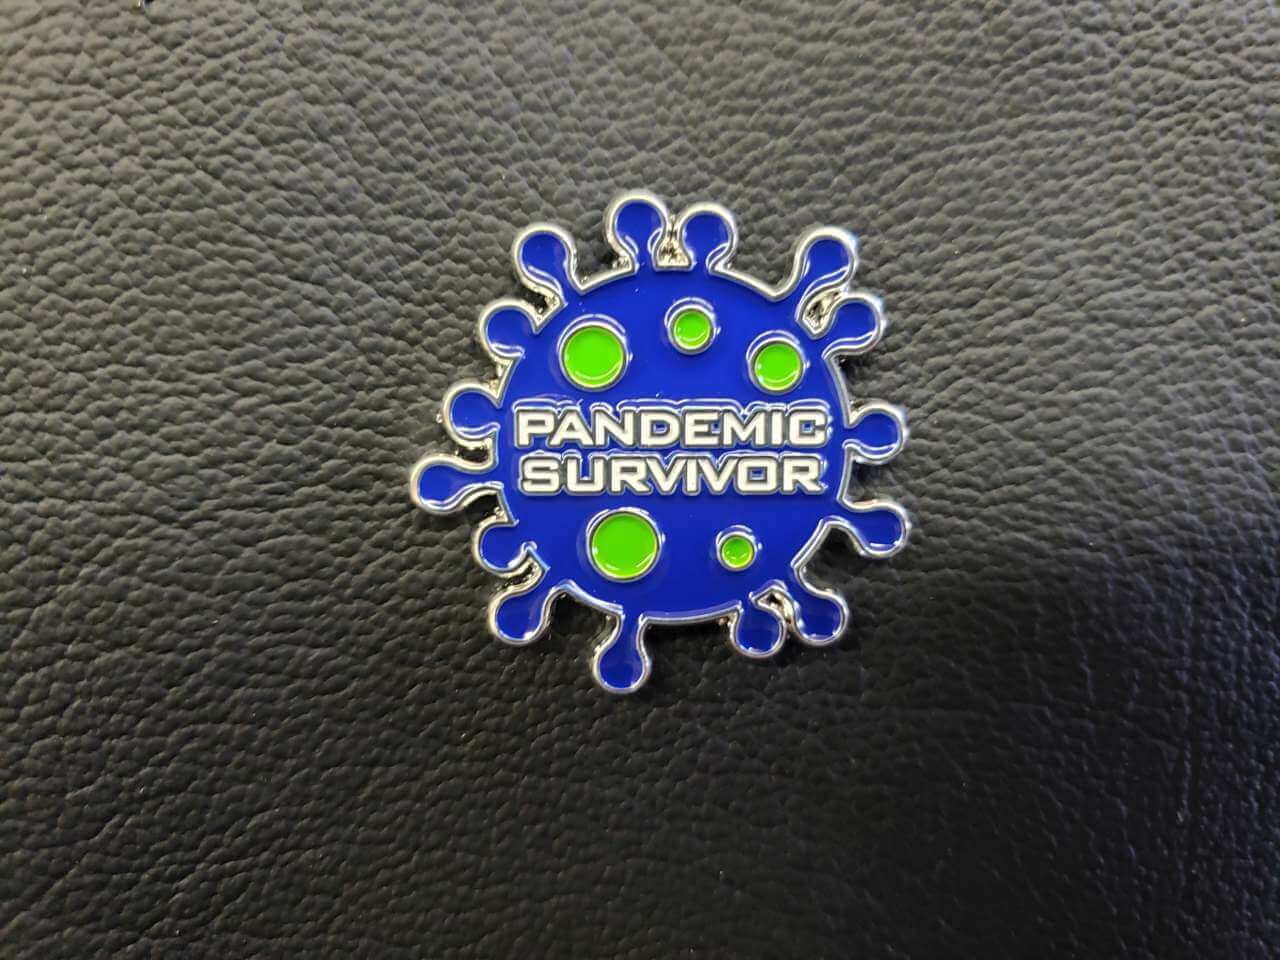 Pandemic Survivor Enamel Pin 2